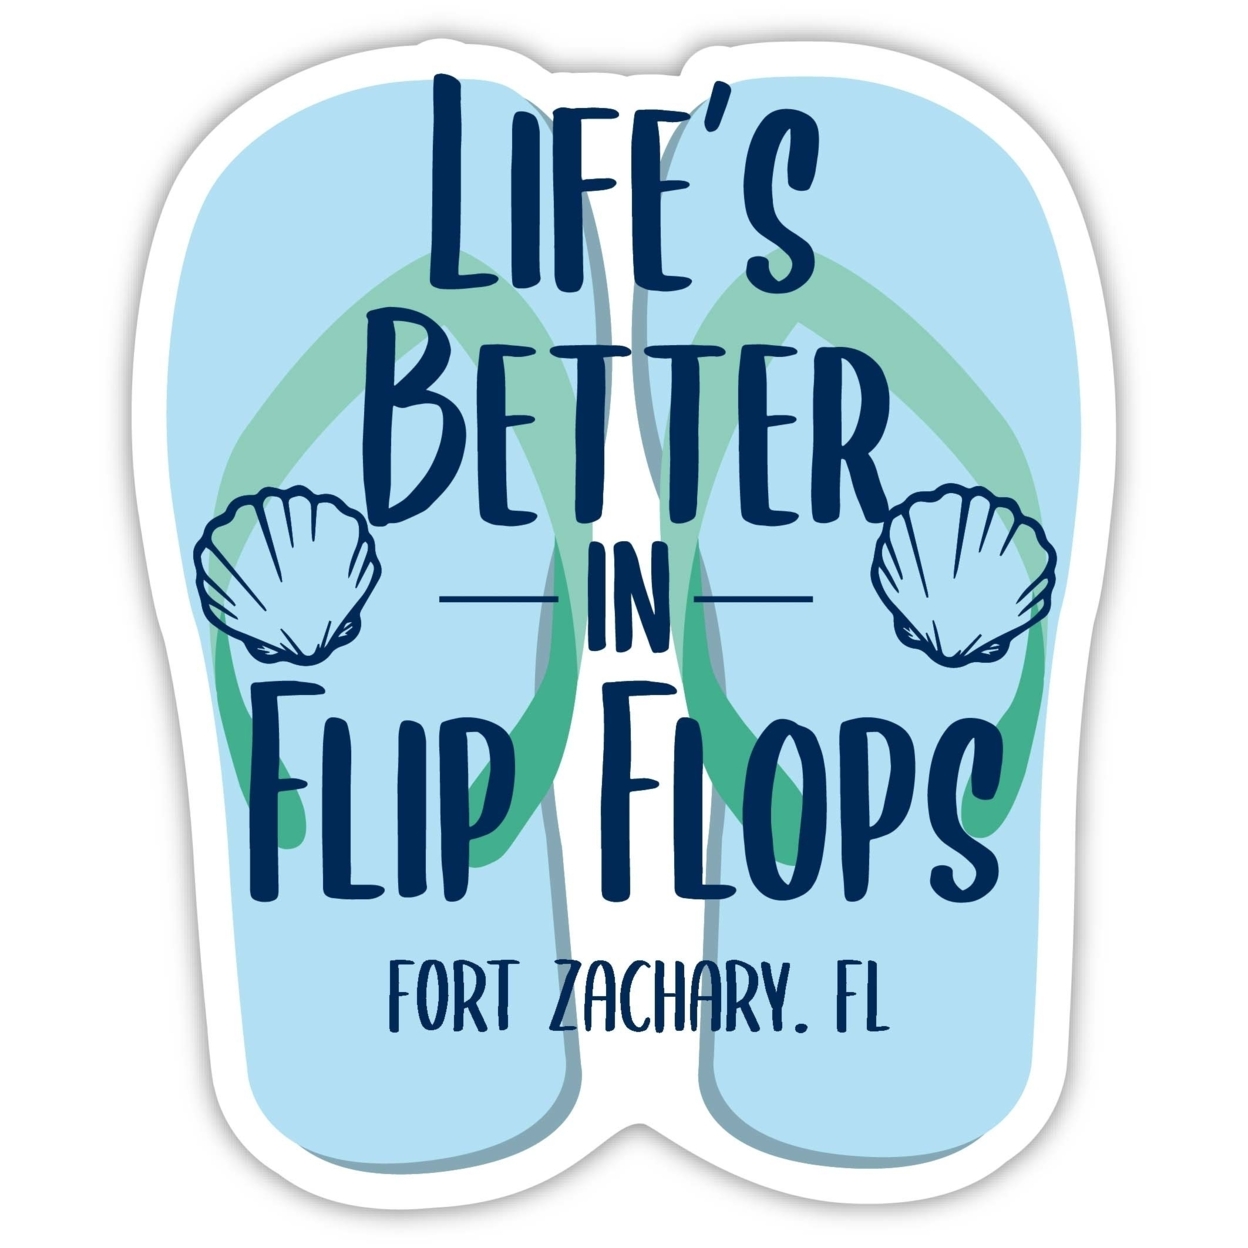 Fort Zachary Florida Souvenir 4 Inch Vinyl Decal Sticker Flip Flop Design